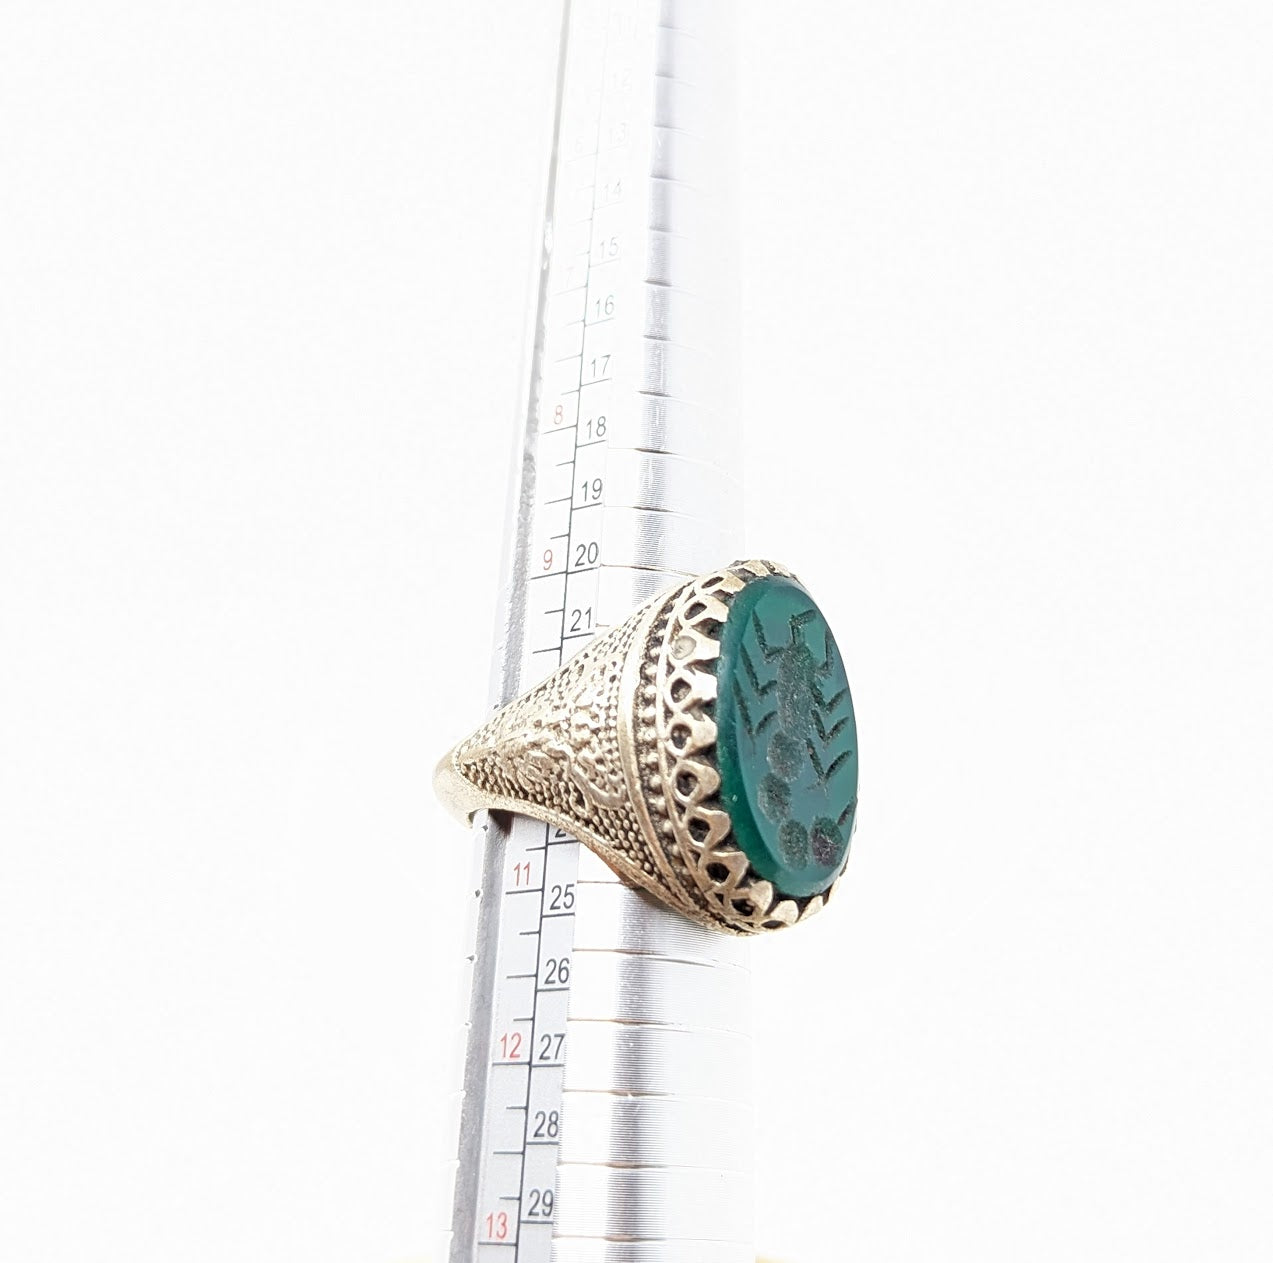 Antique Green Agate Intaglio Scorpion Ring | Near Eastern Origins